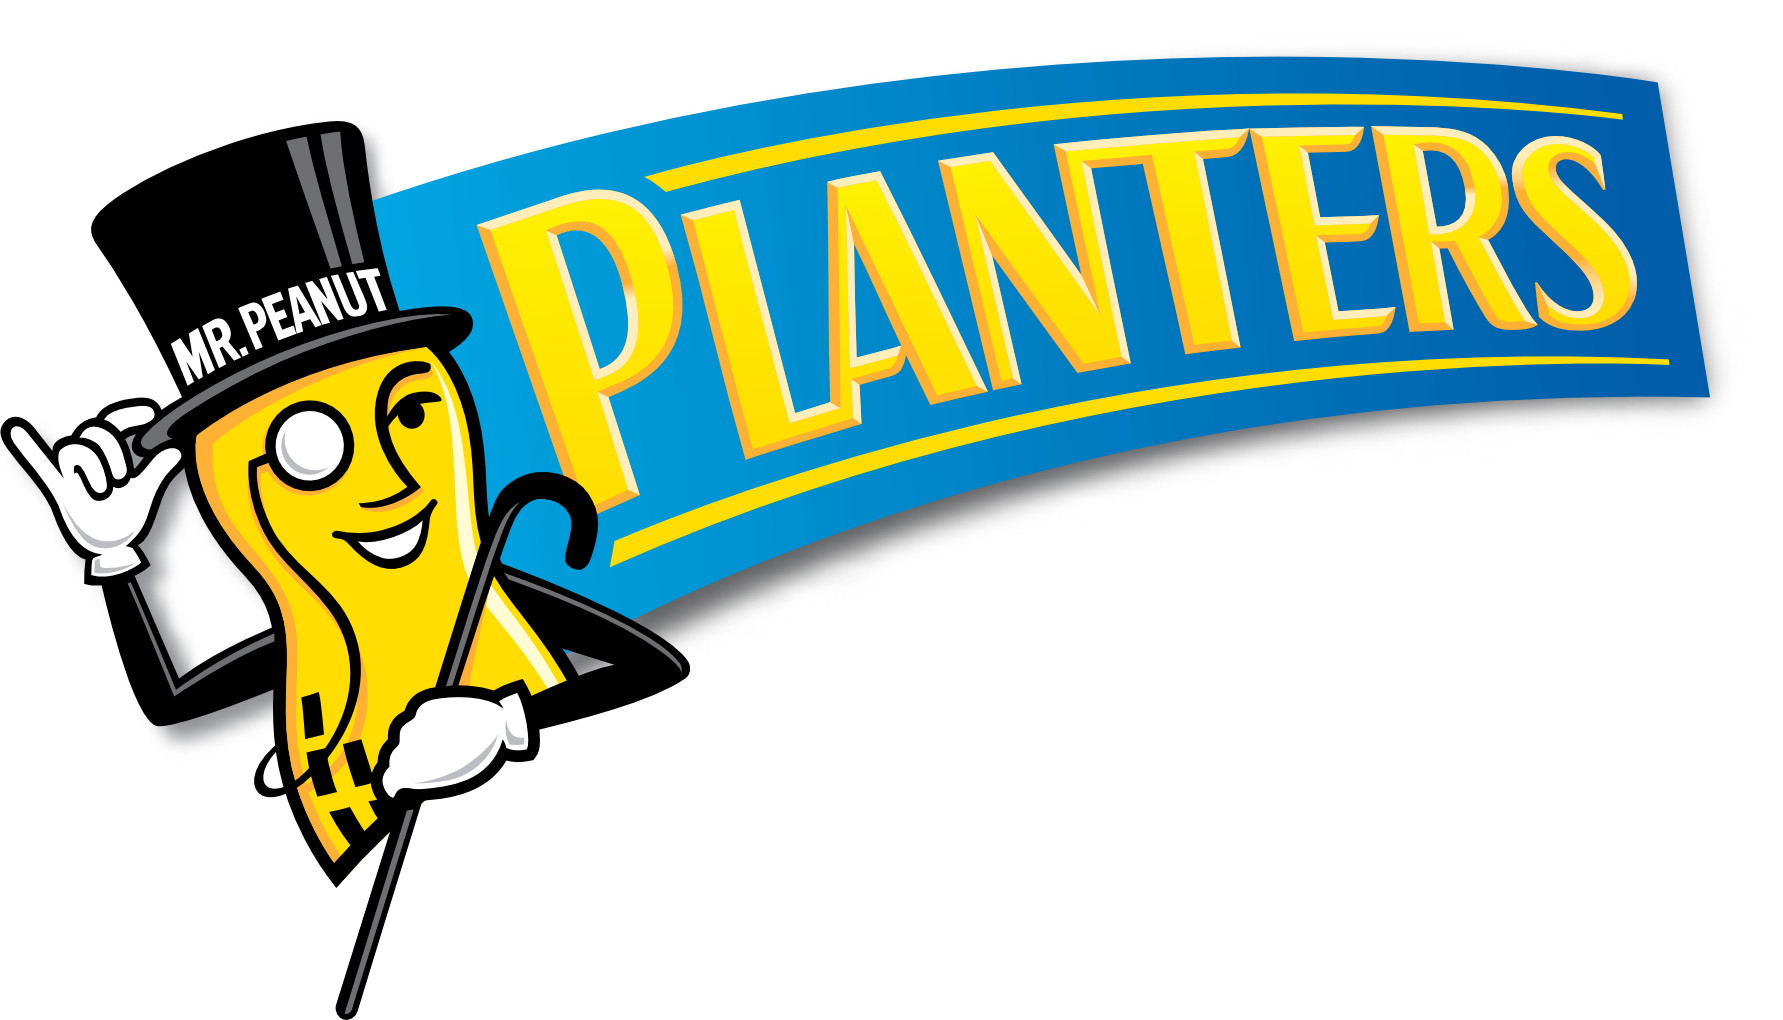 Planters_logo_2008